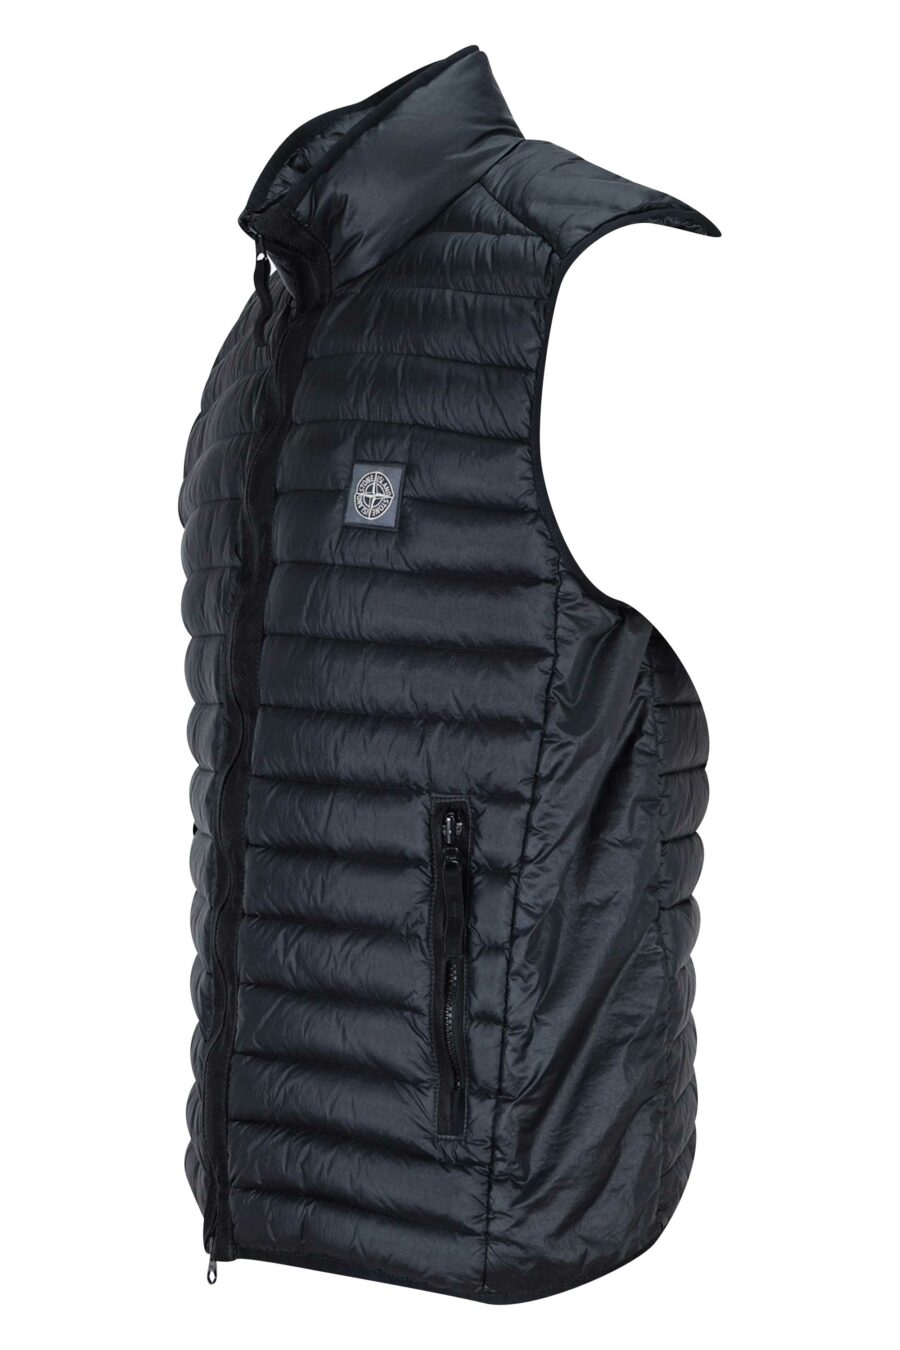 Black waistcoat with square mini-logo - 8052572724831 1